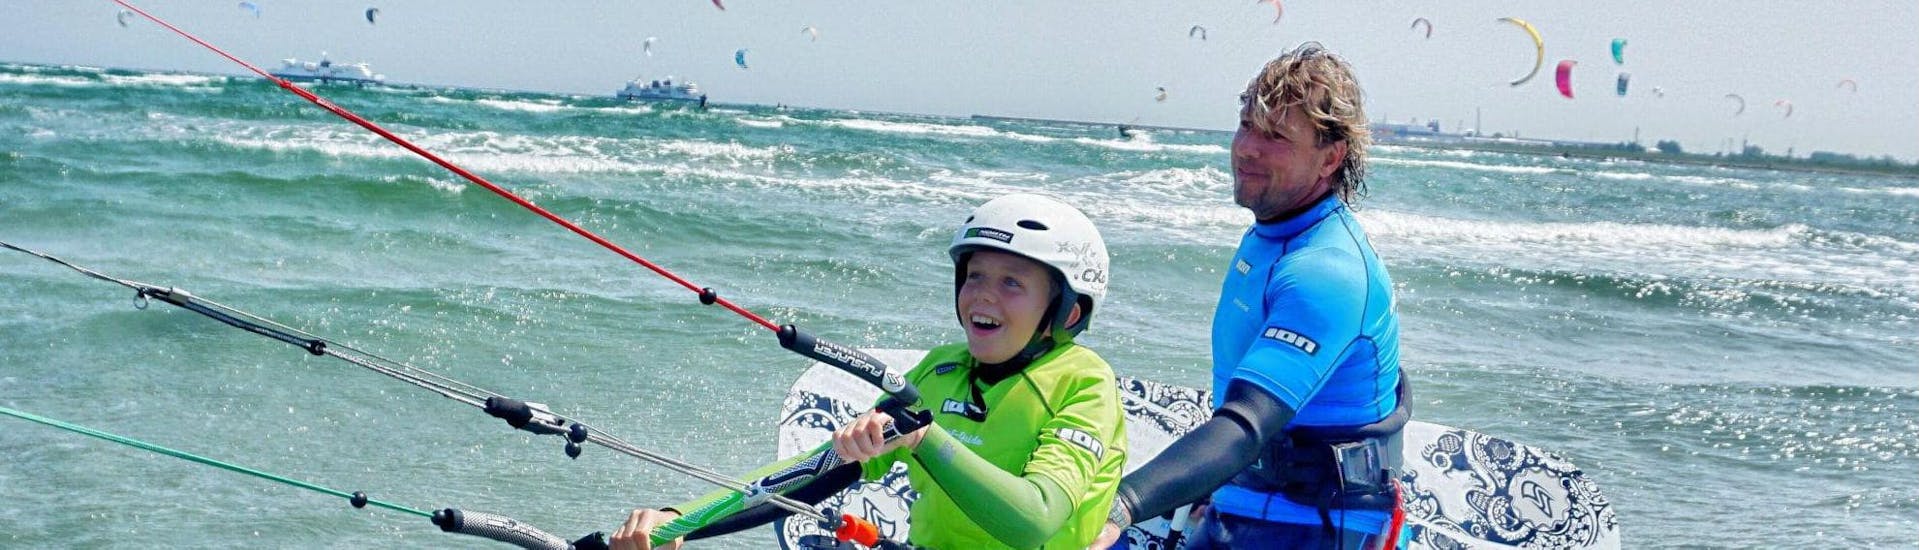 Lezioni di kitesurf a Fehmarn da 8 anni.